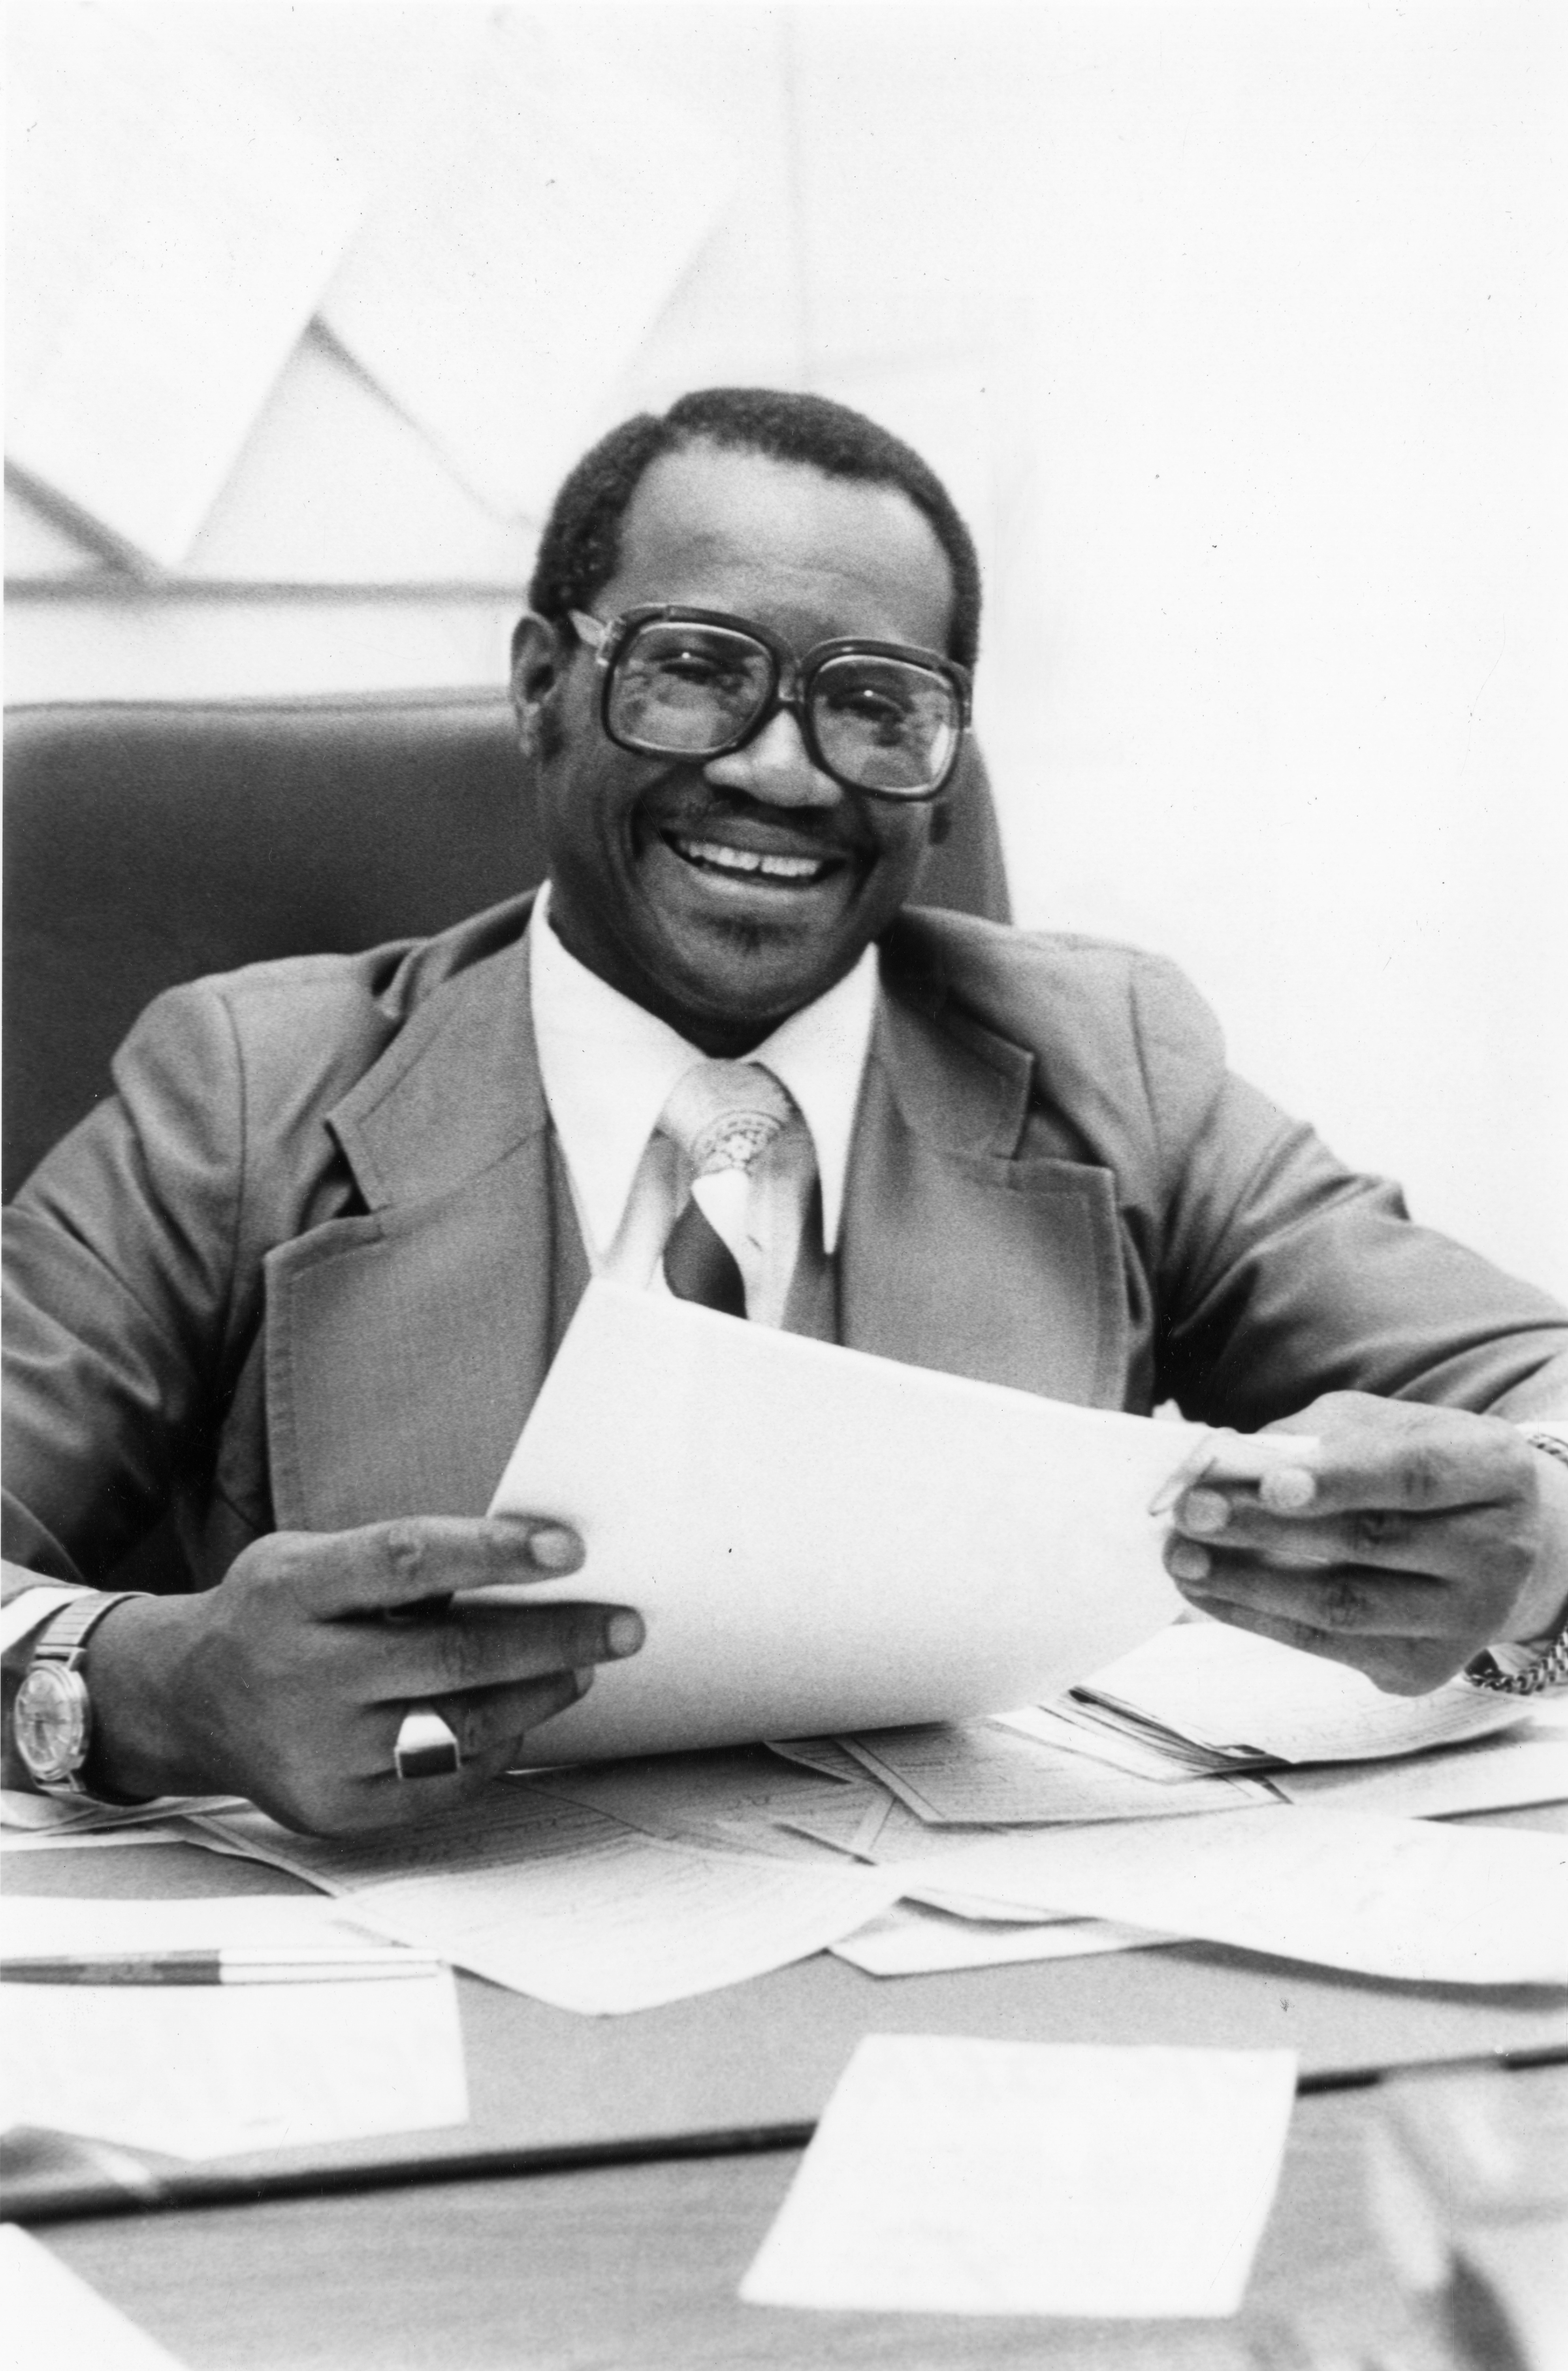 Andrew Jenkins in 1979